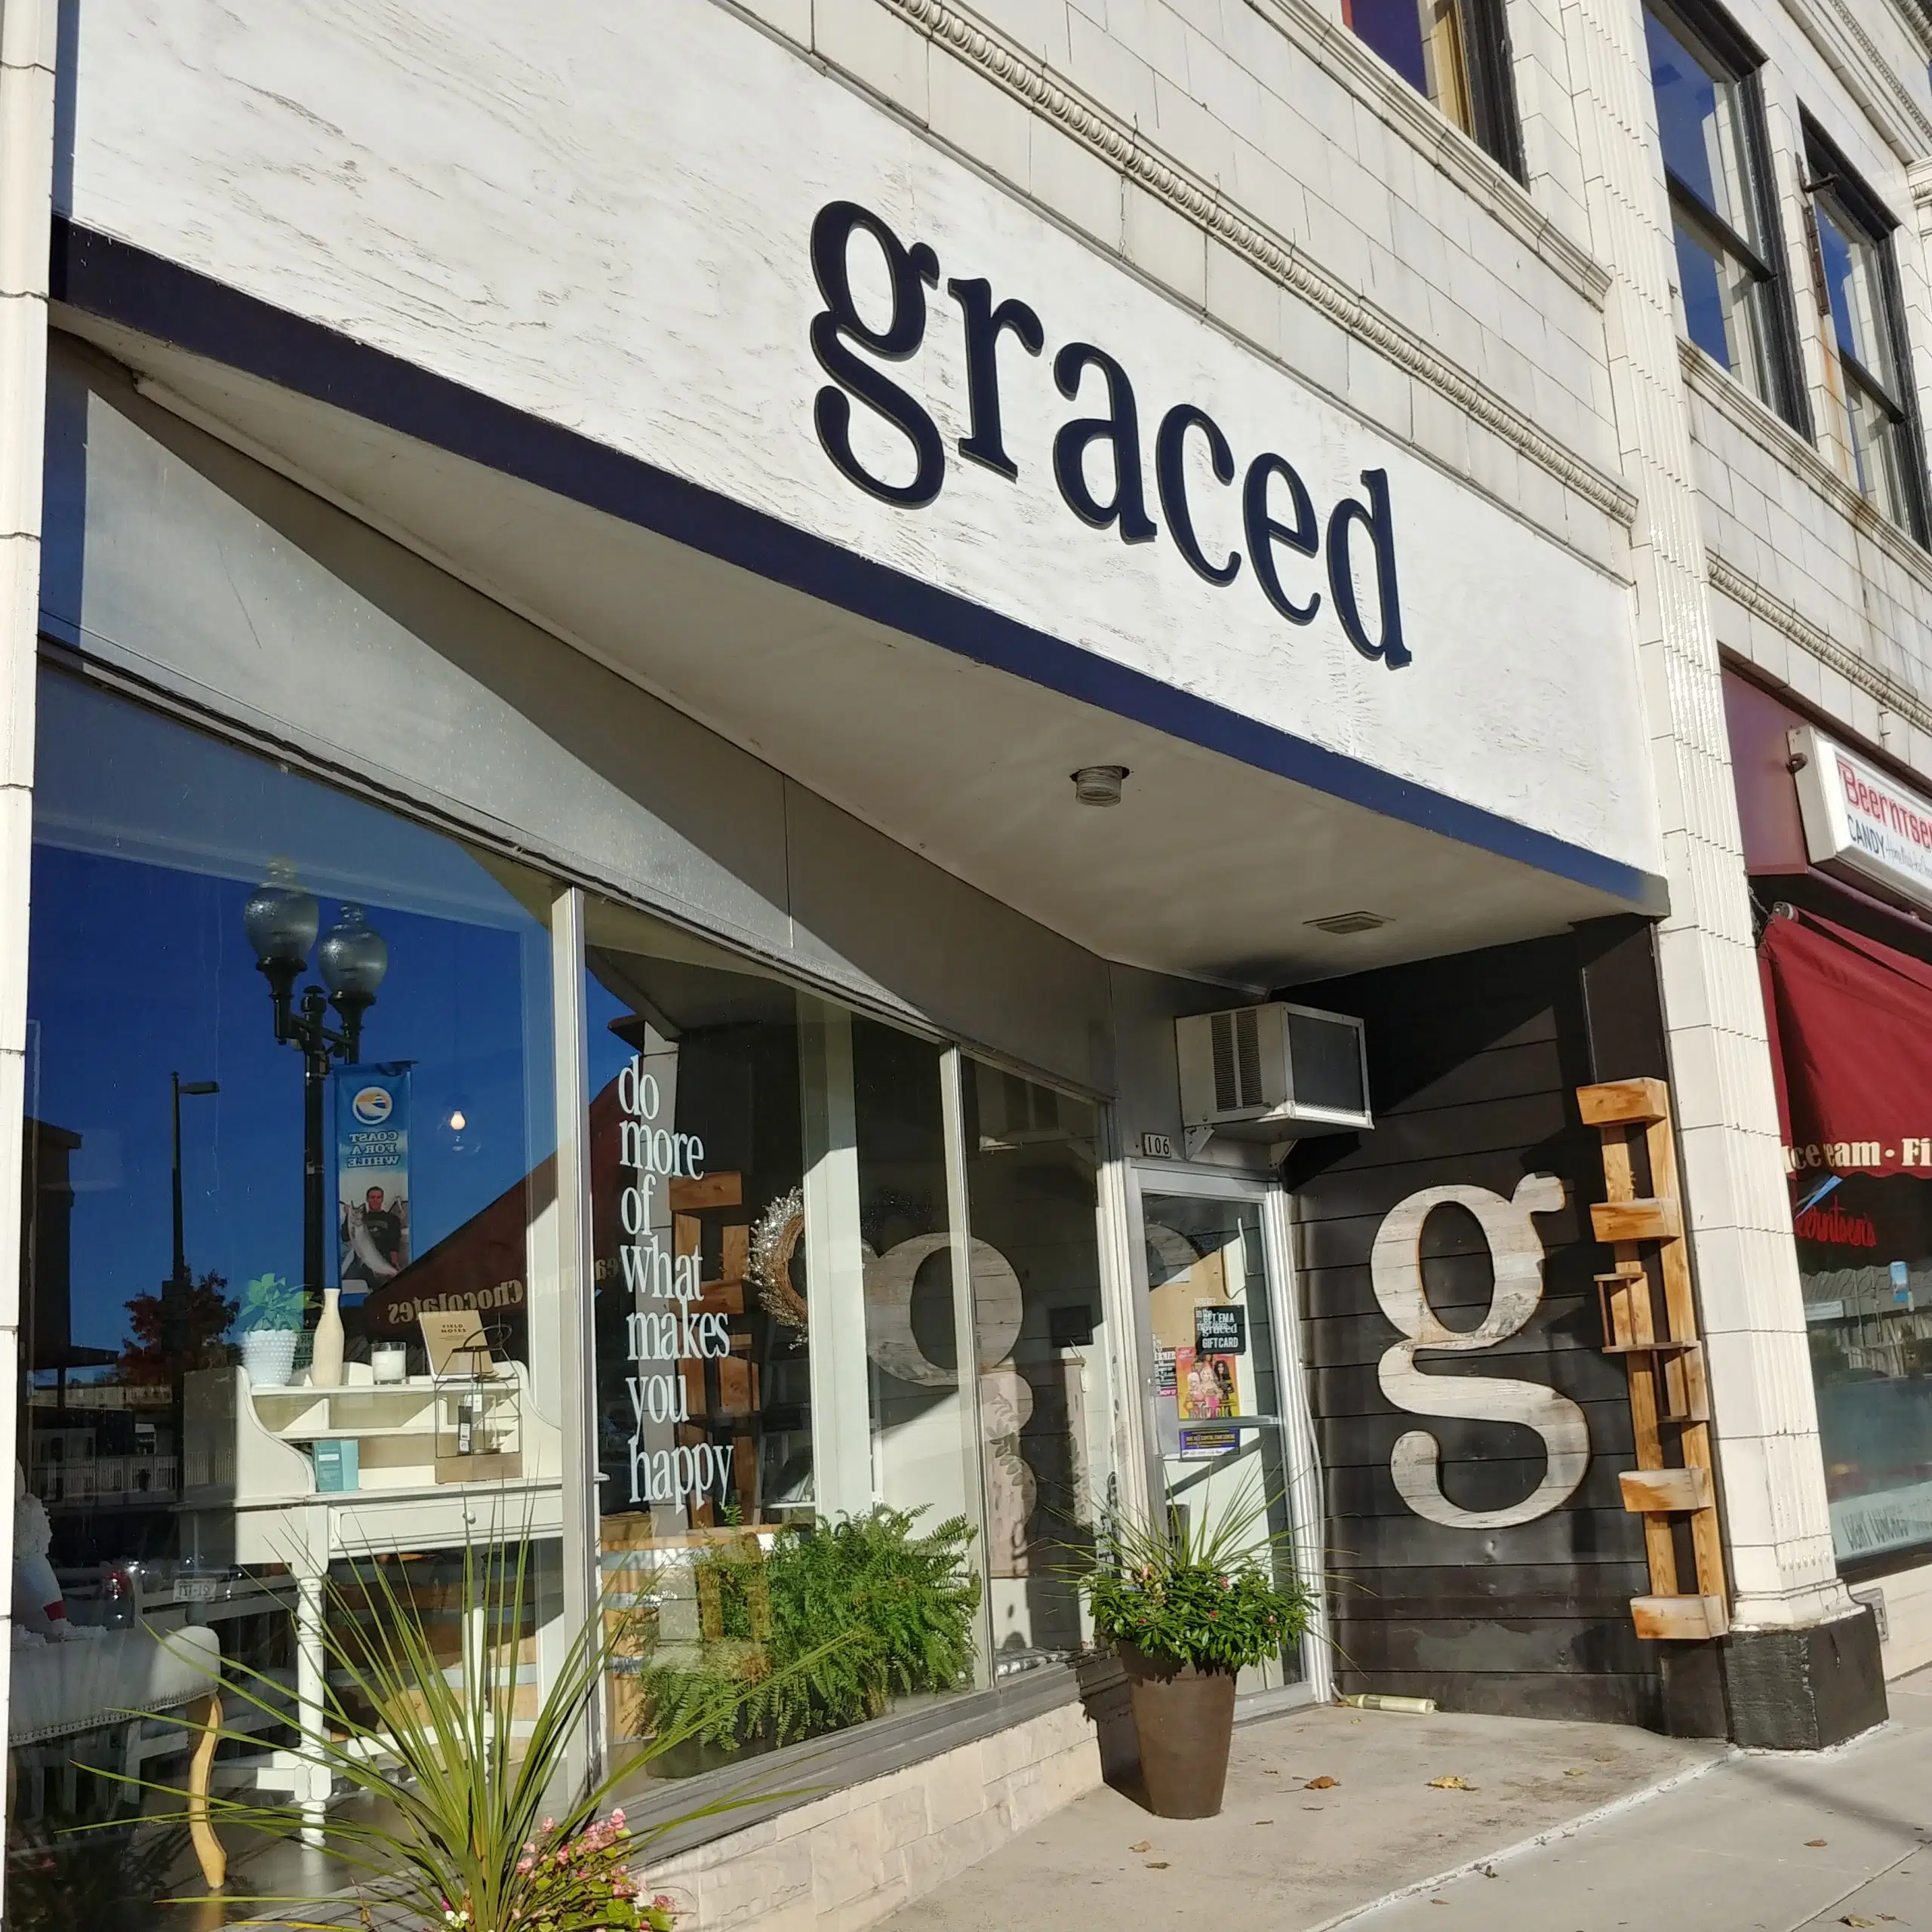 Local Business Spotlight: Graced